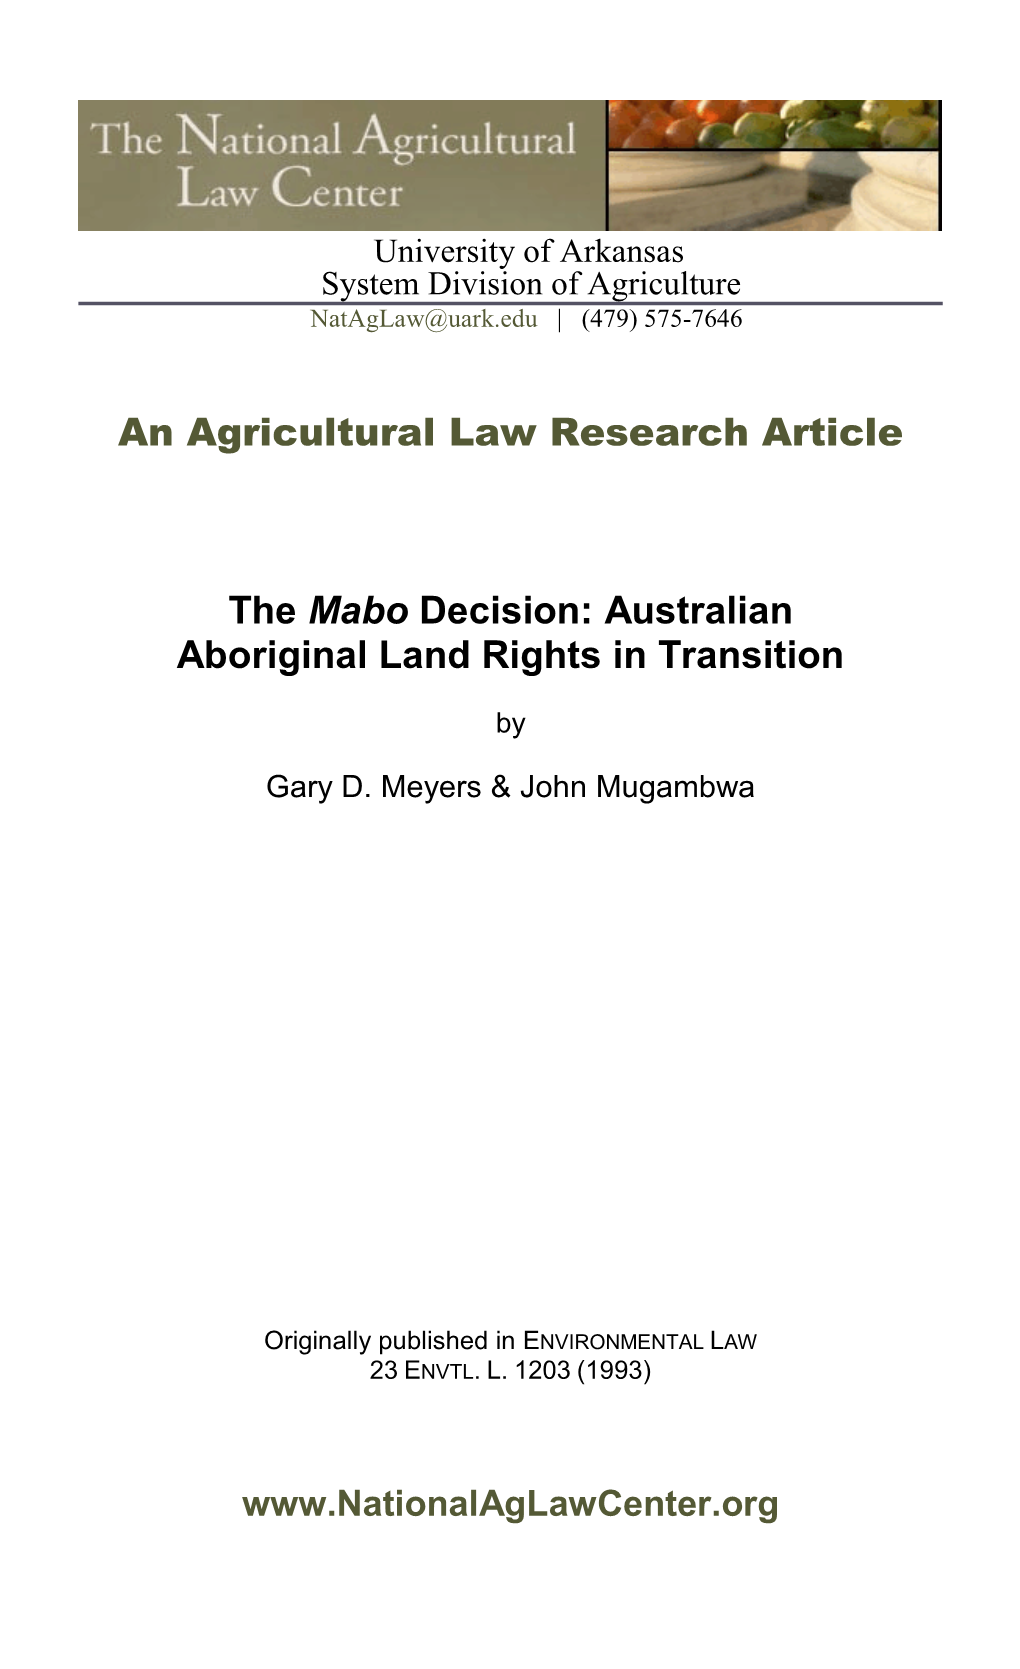 Australian Aboriginal Land Rights in Transition